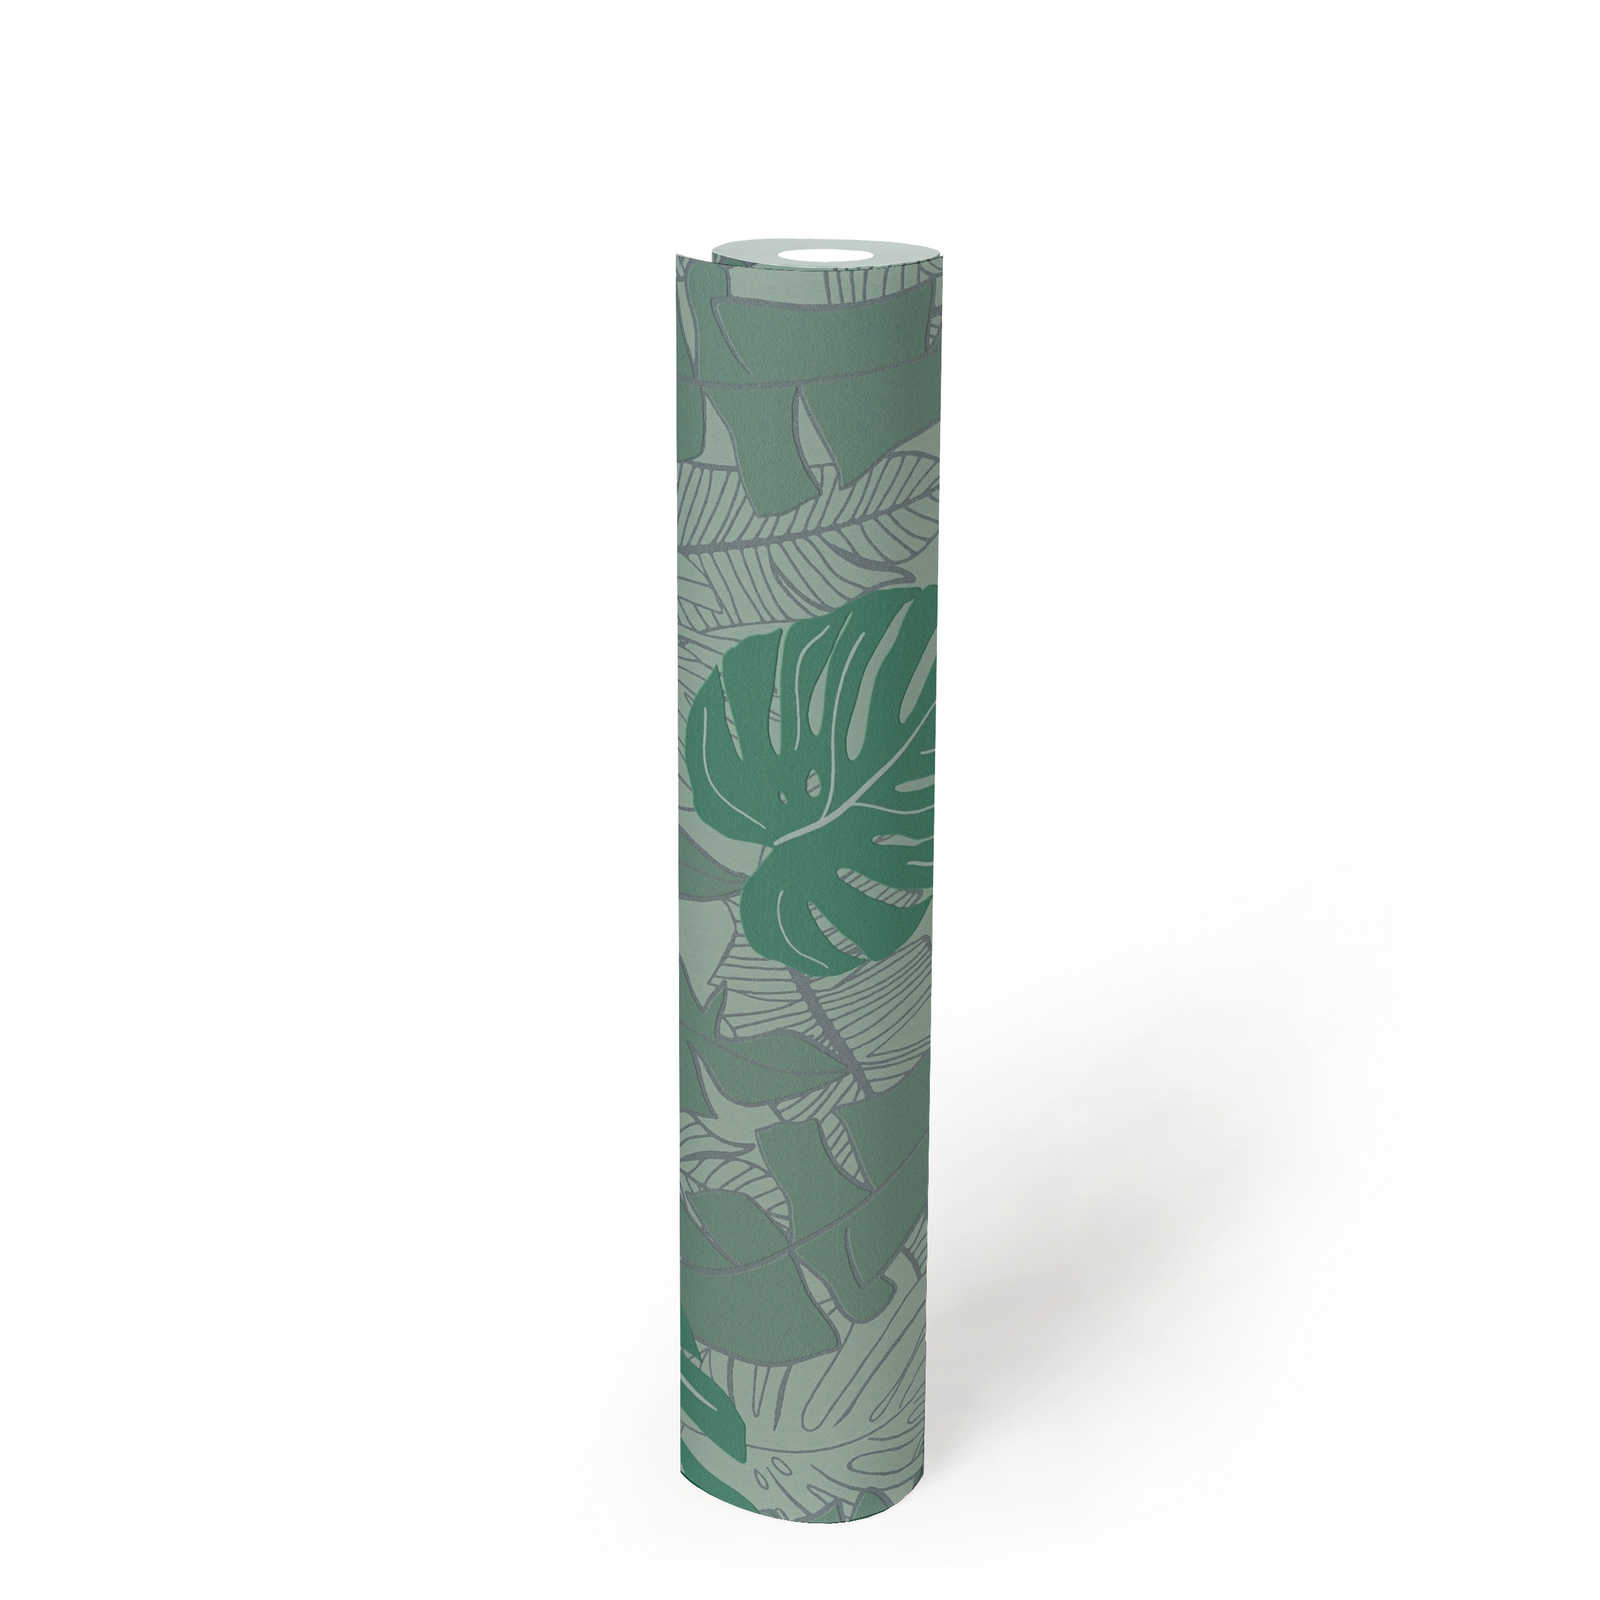             Jungle wallpaper with shiny pattern - green, metallic
        